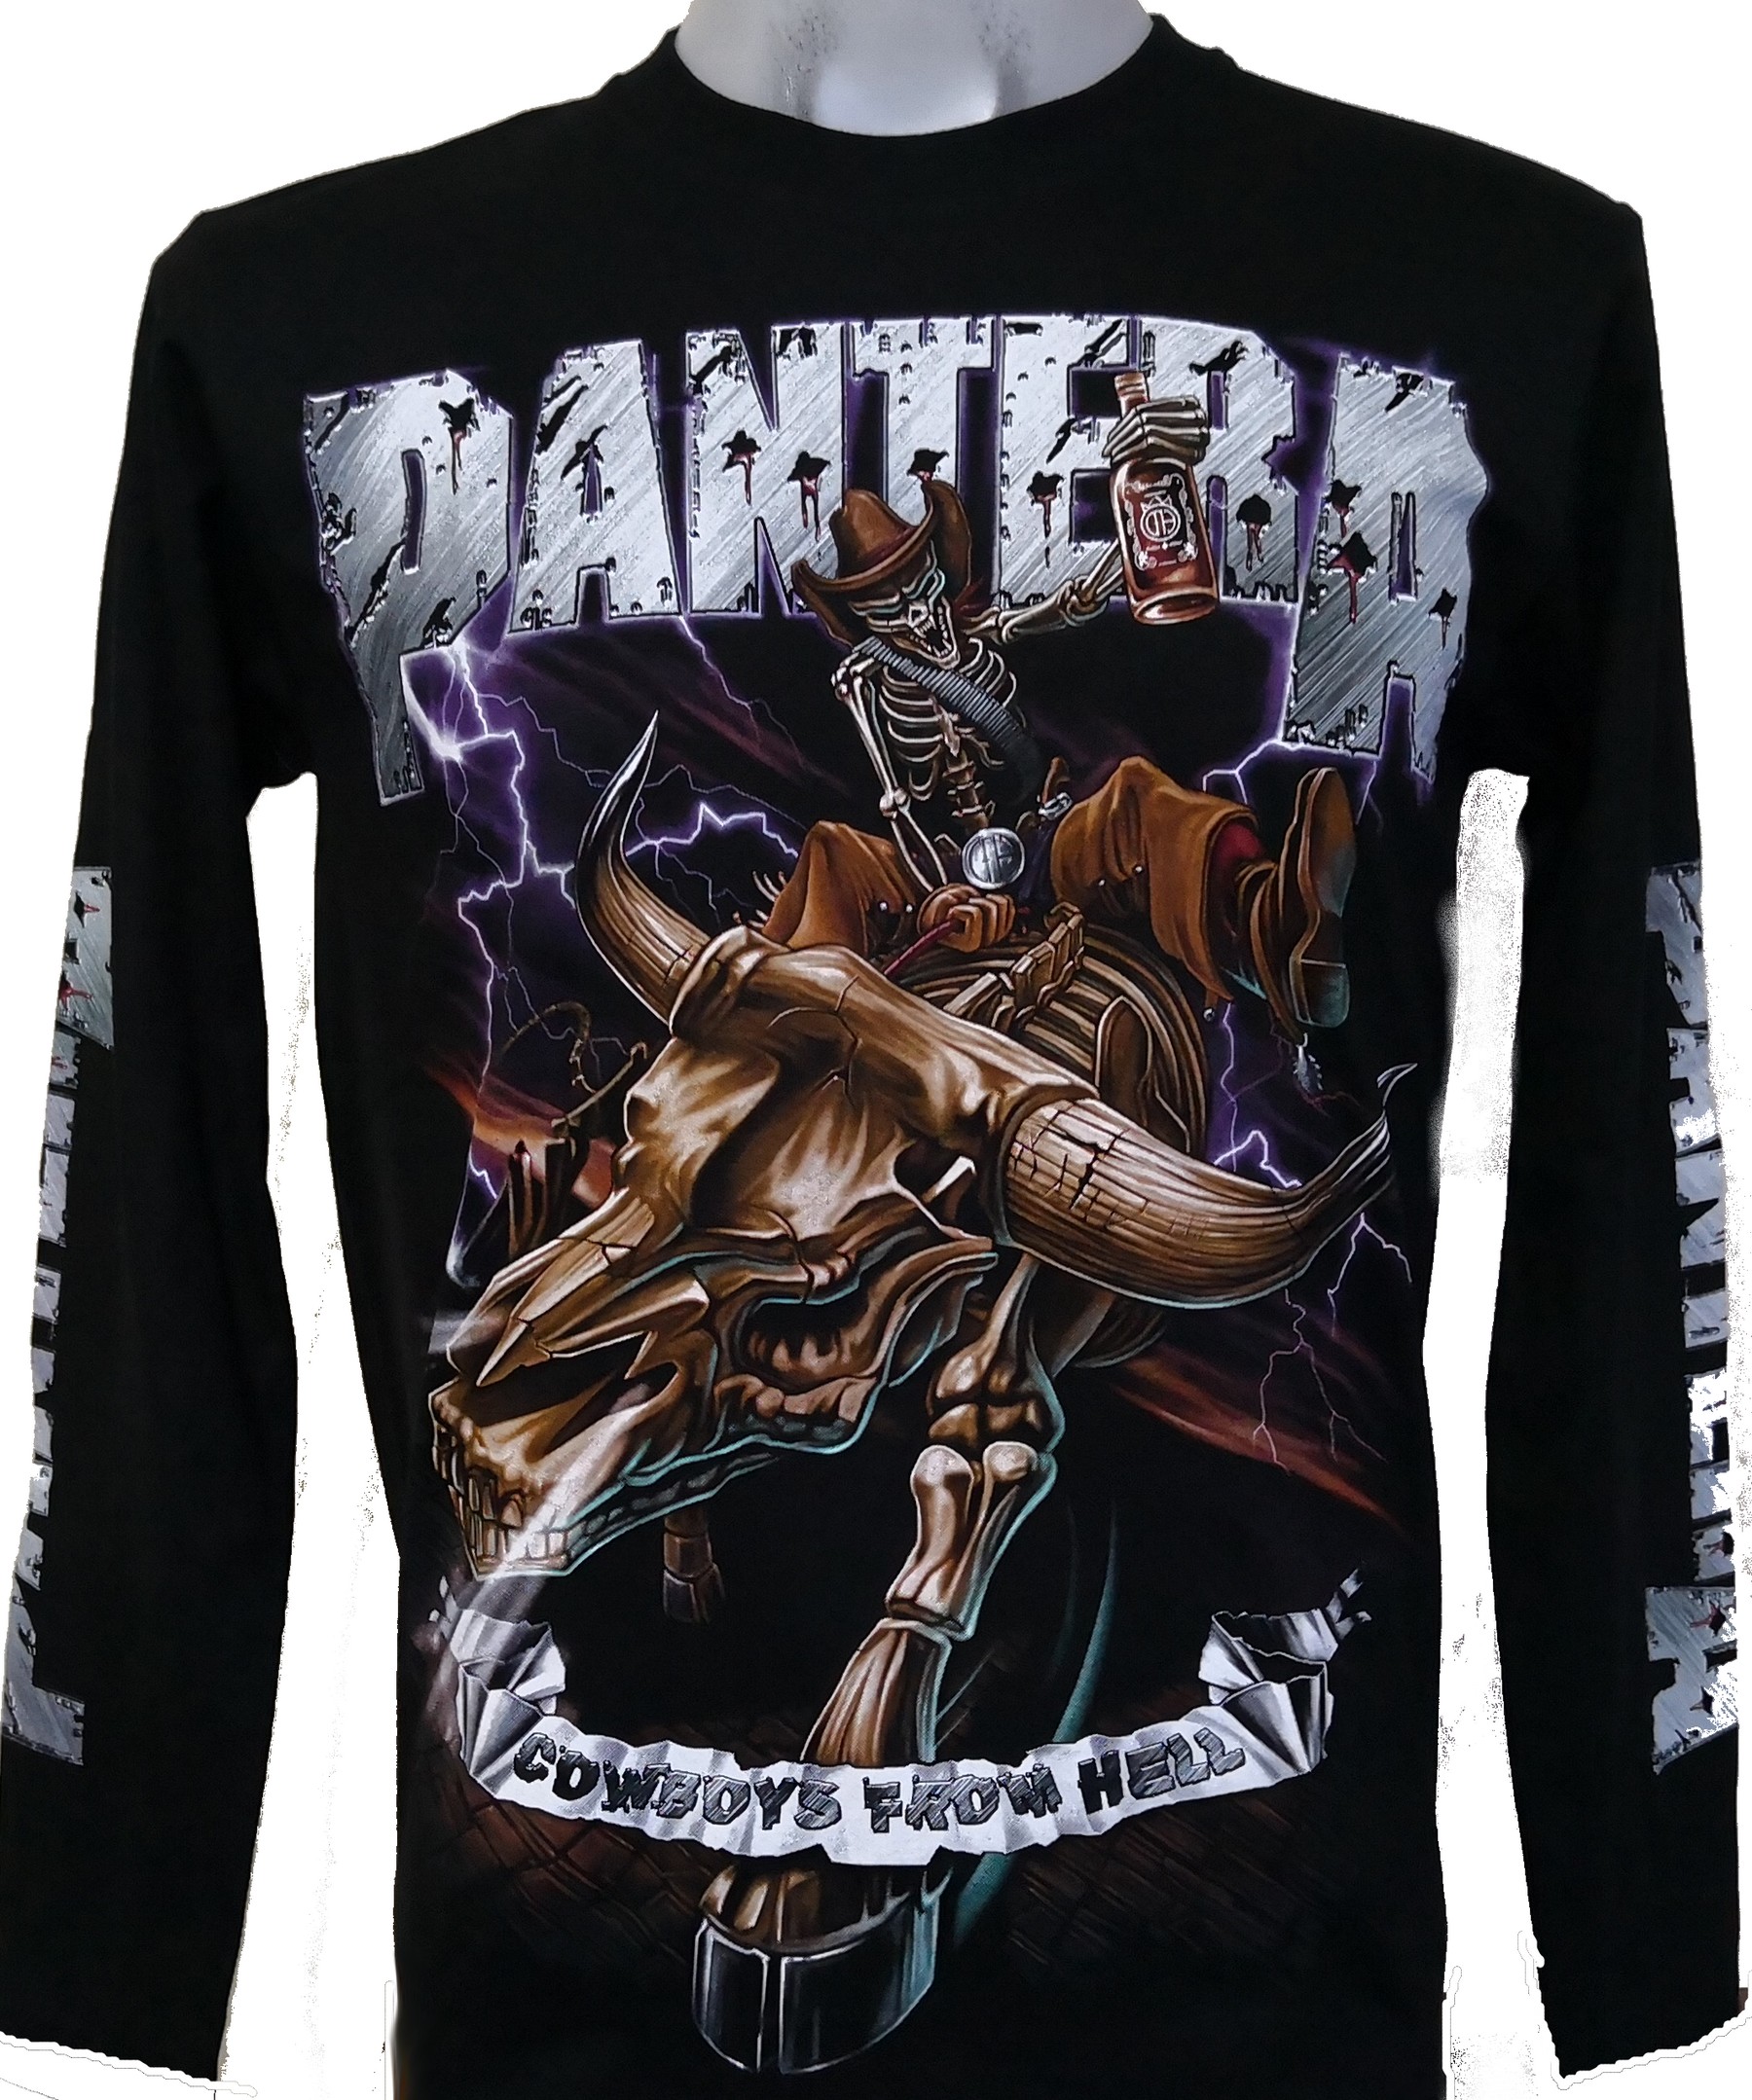 Buy > pantera shirt cowboys from hell > in stock